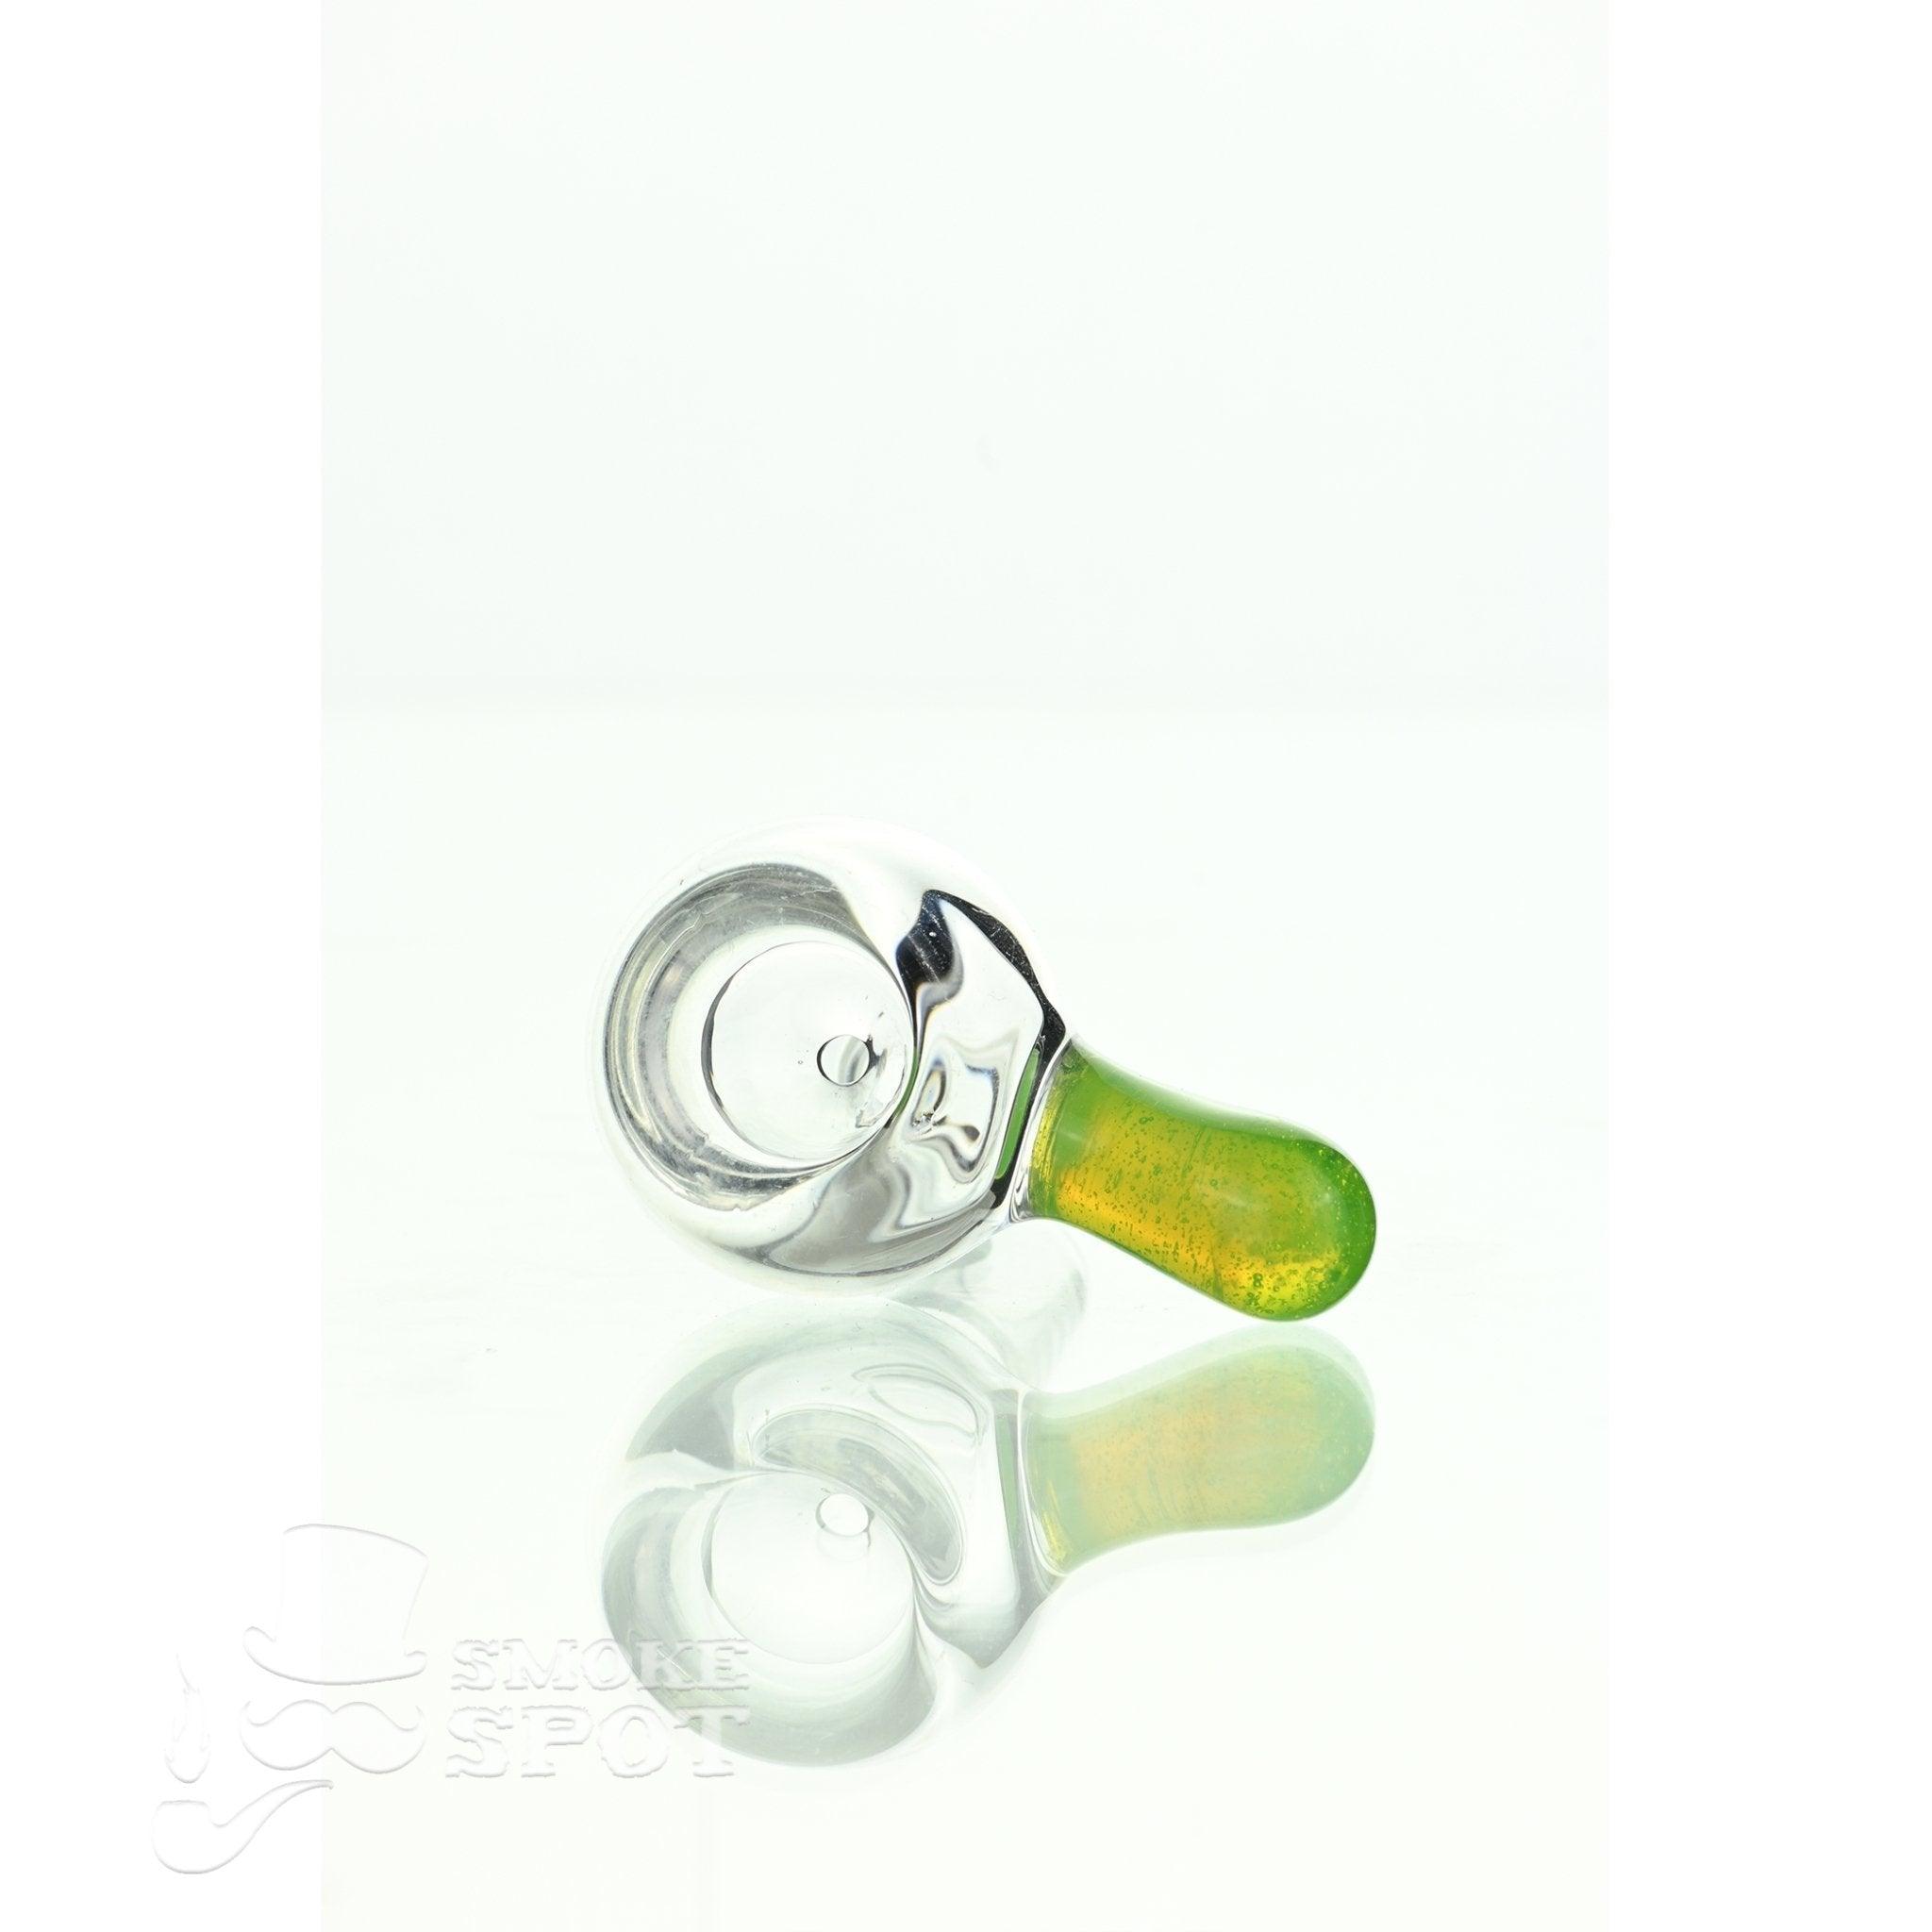 Joe Madigan dry herb slide 14 mm slime green handle - Smoke Spot Smoke Shop